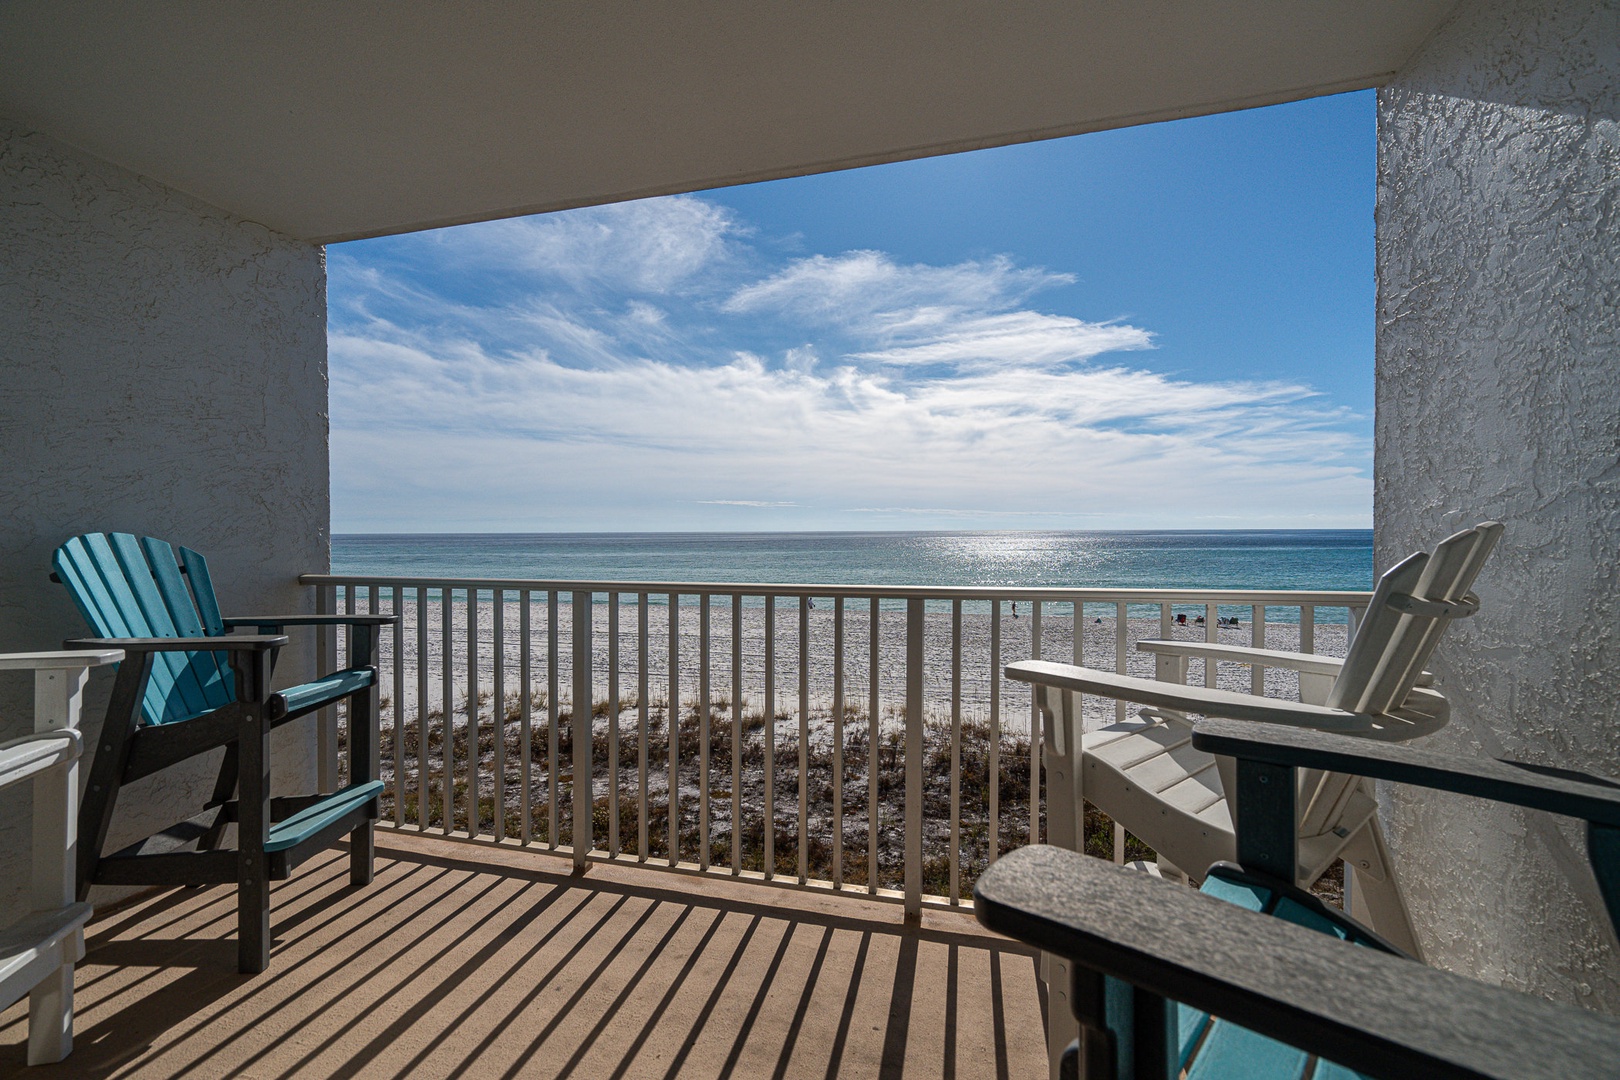 Beachfront balcony with ocean view